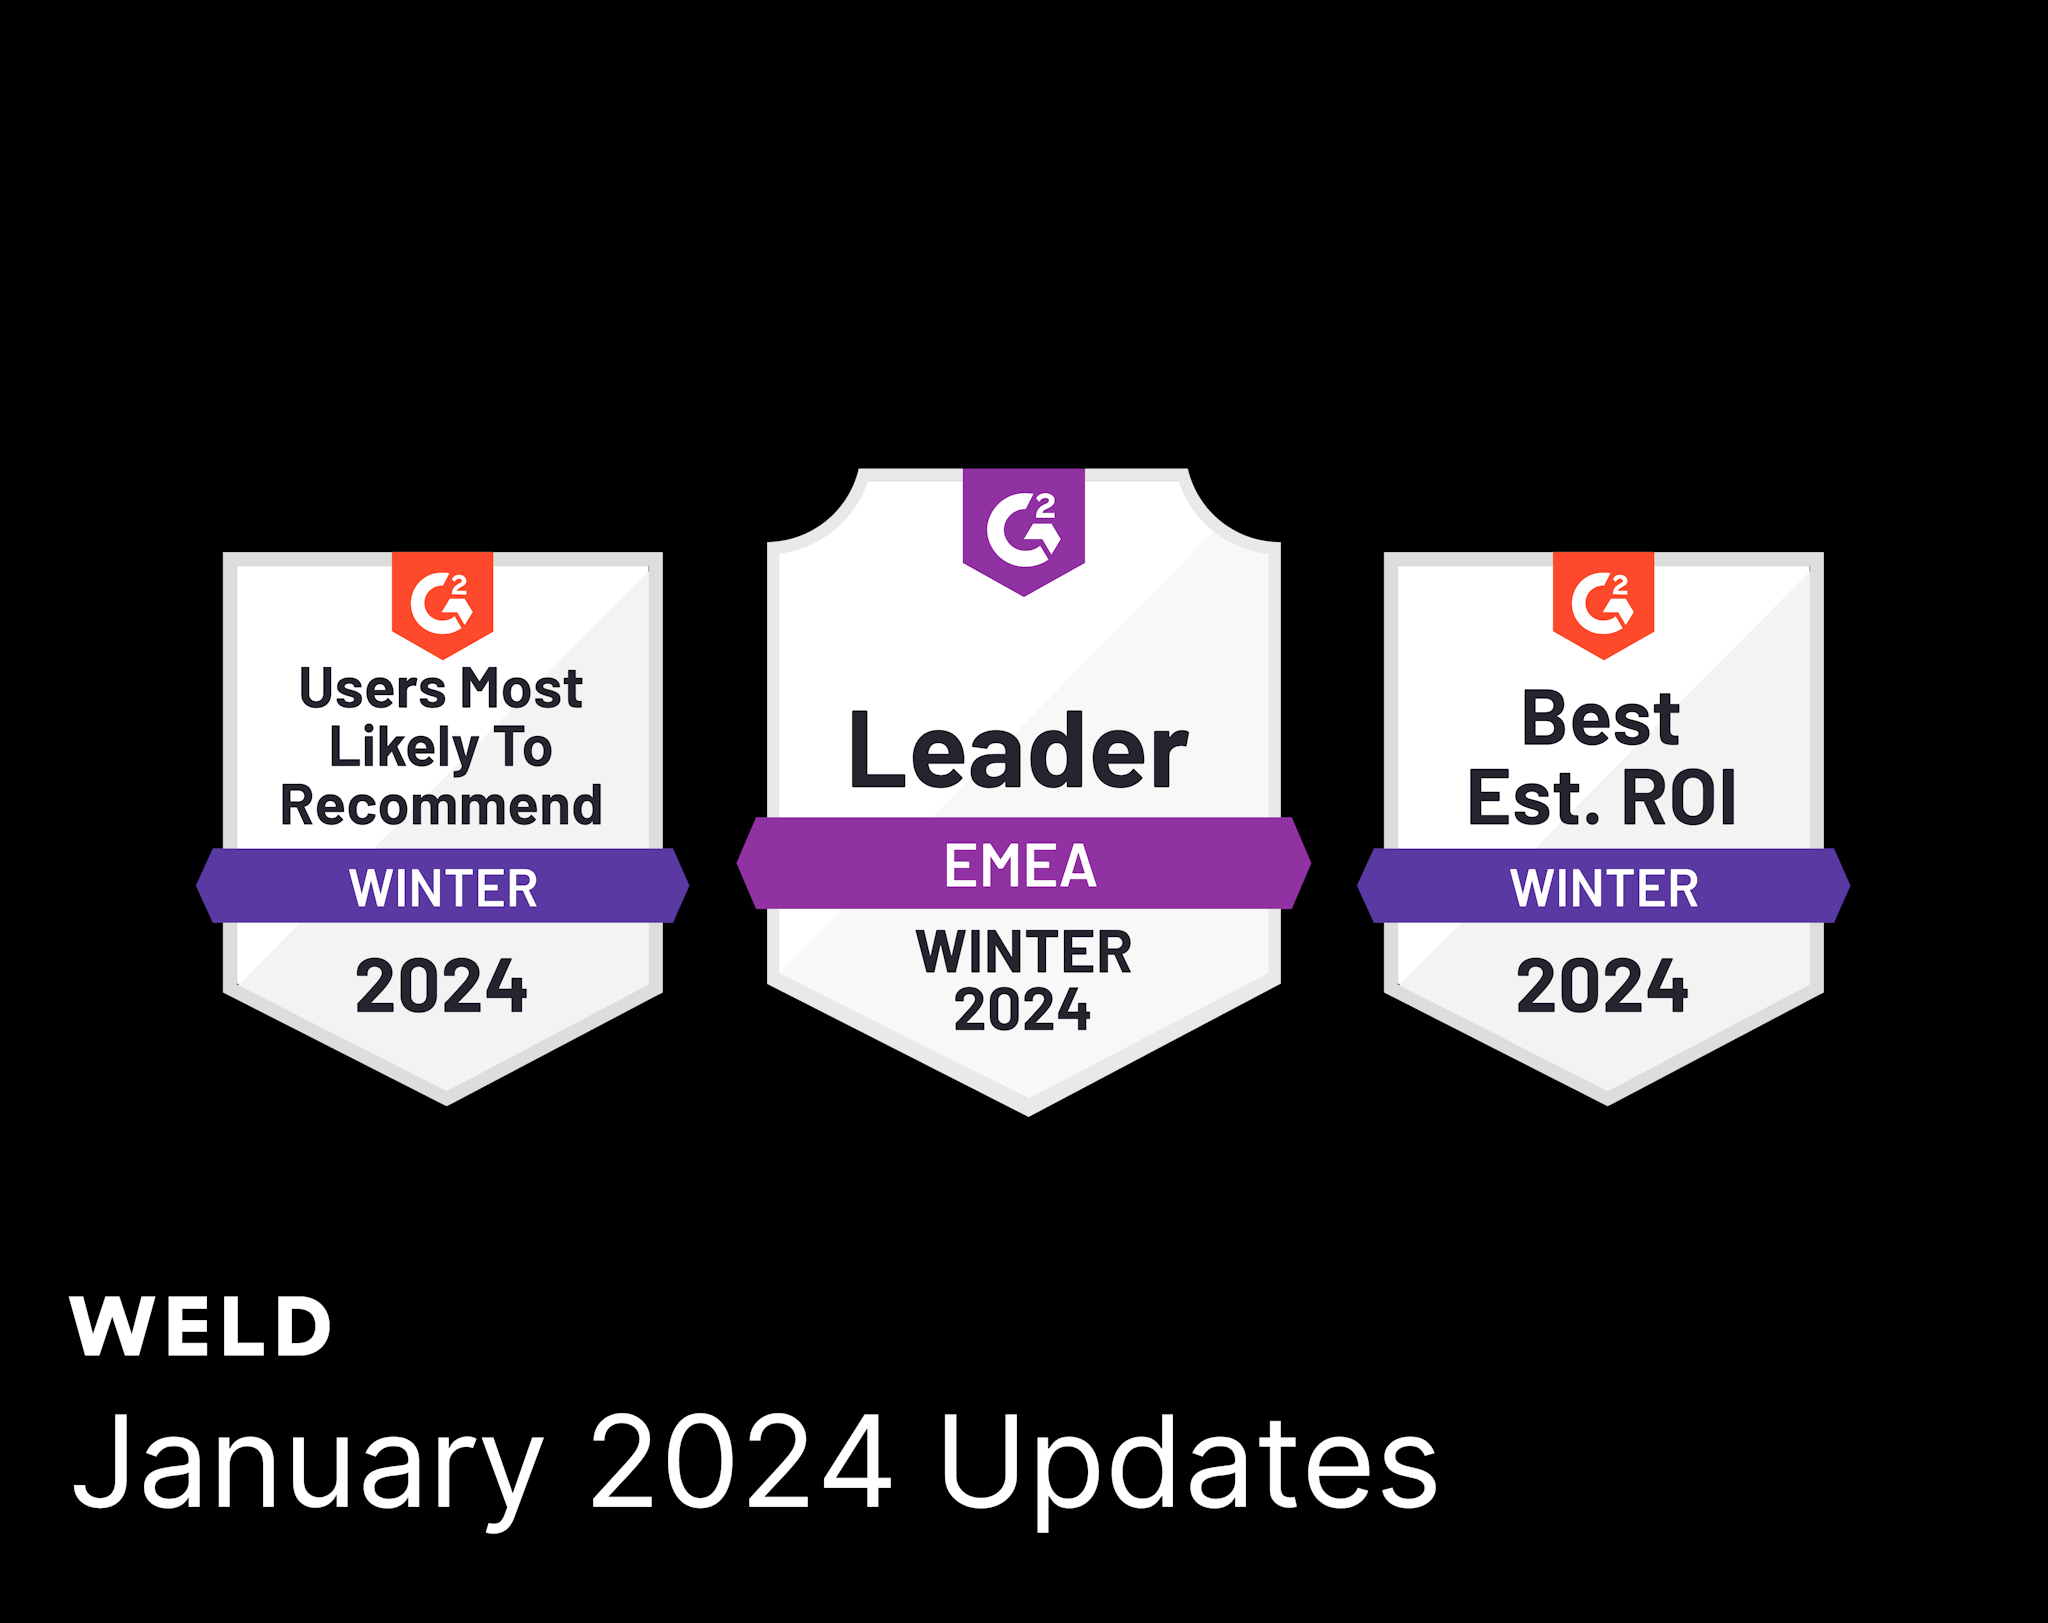 Weld January 2024 Updates image